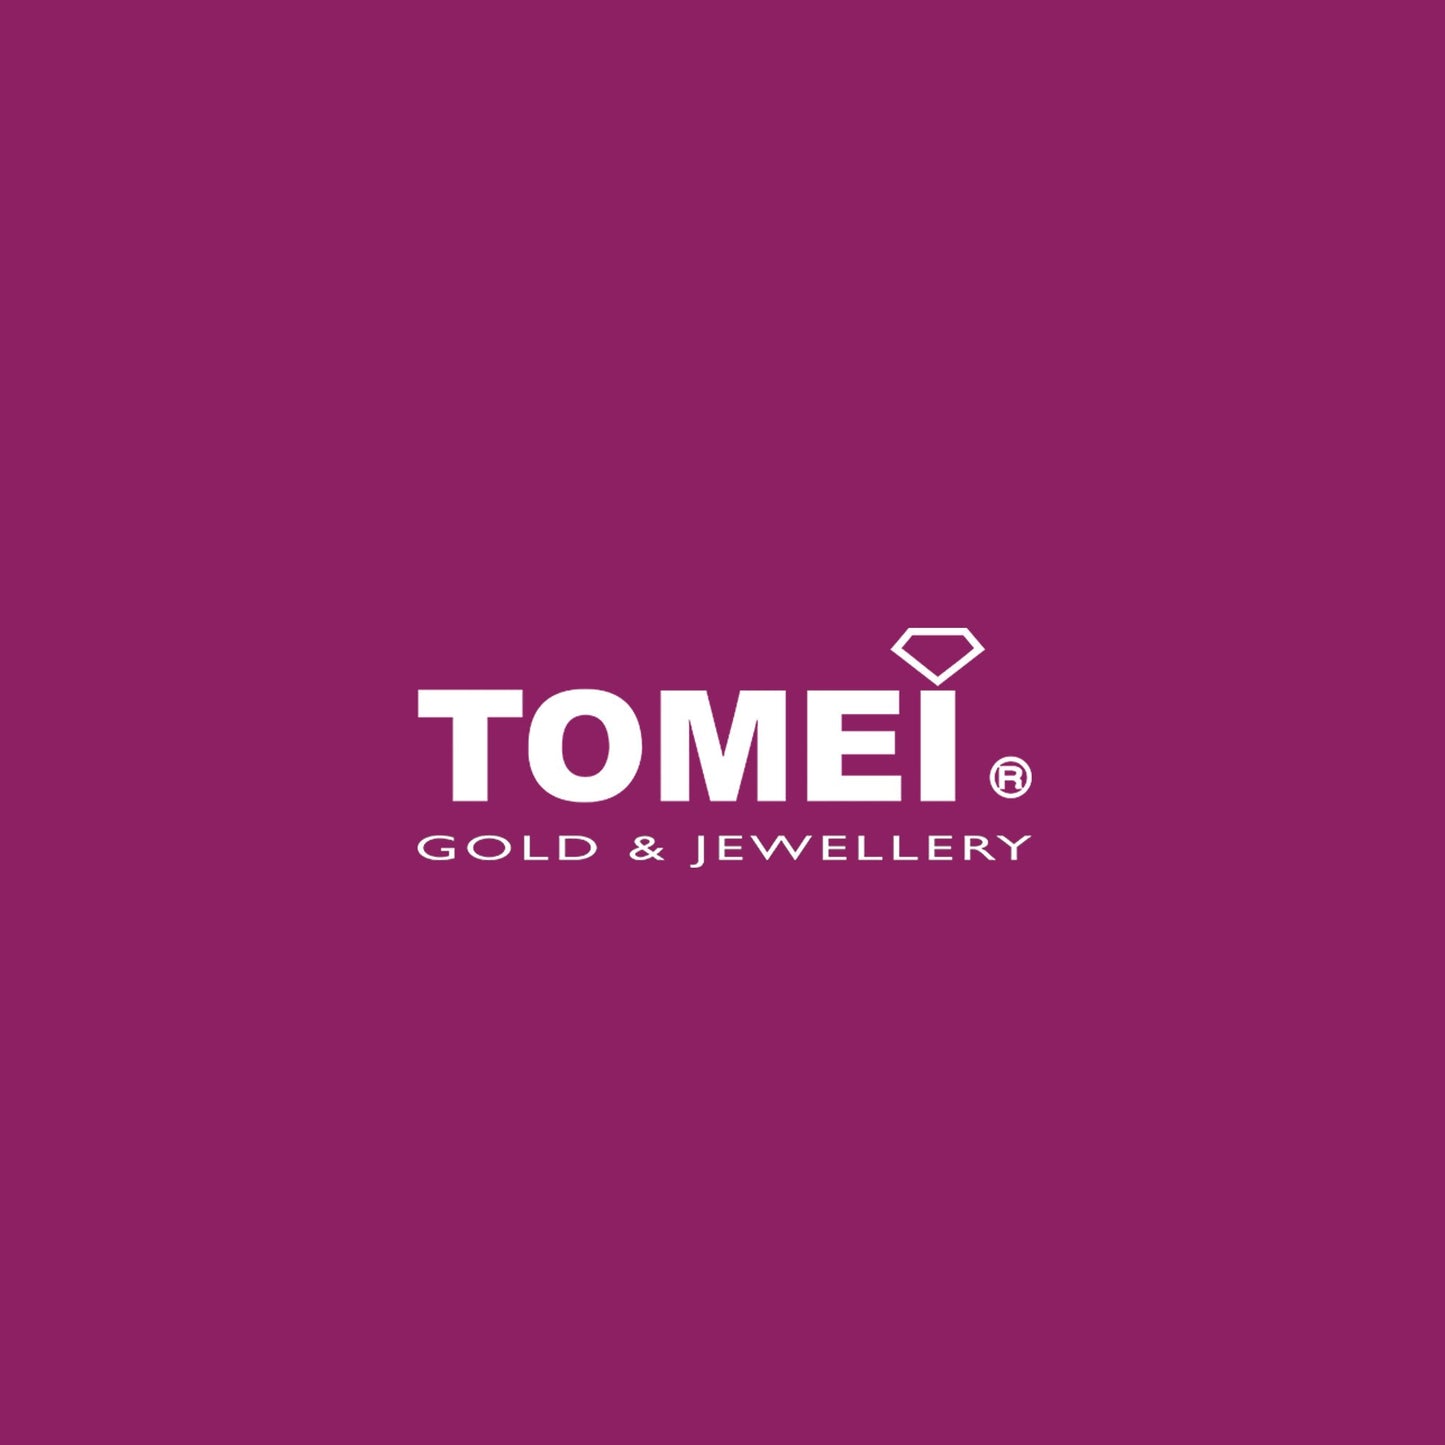 Tomei White Gold 585 (14K) Diamond Earrings (E1018)